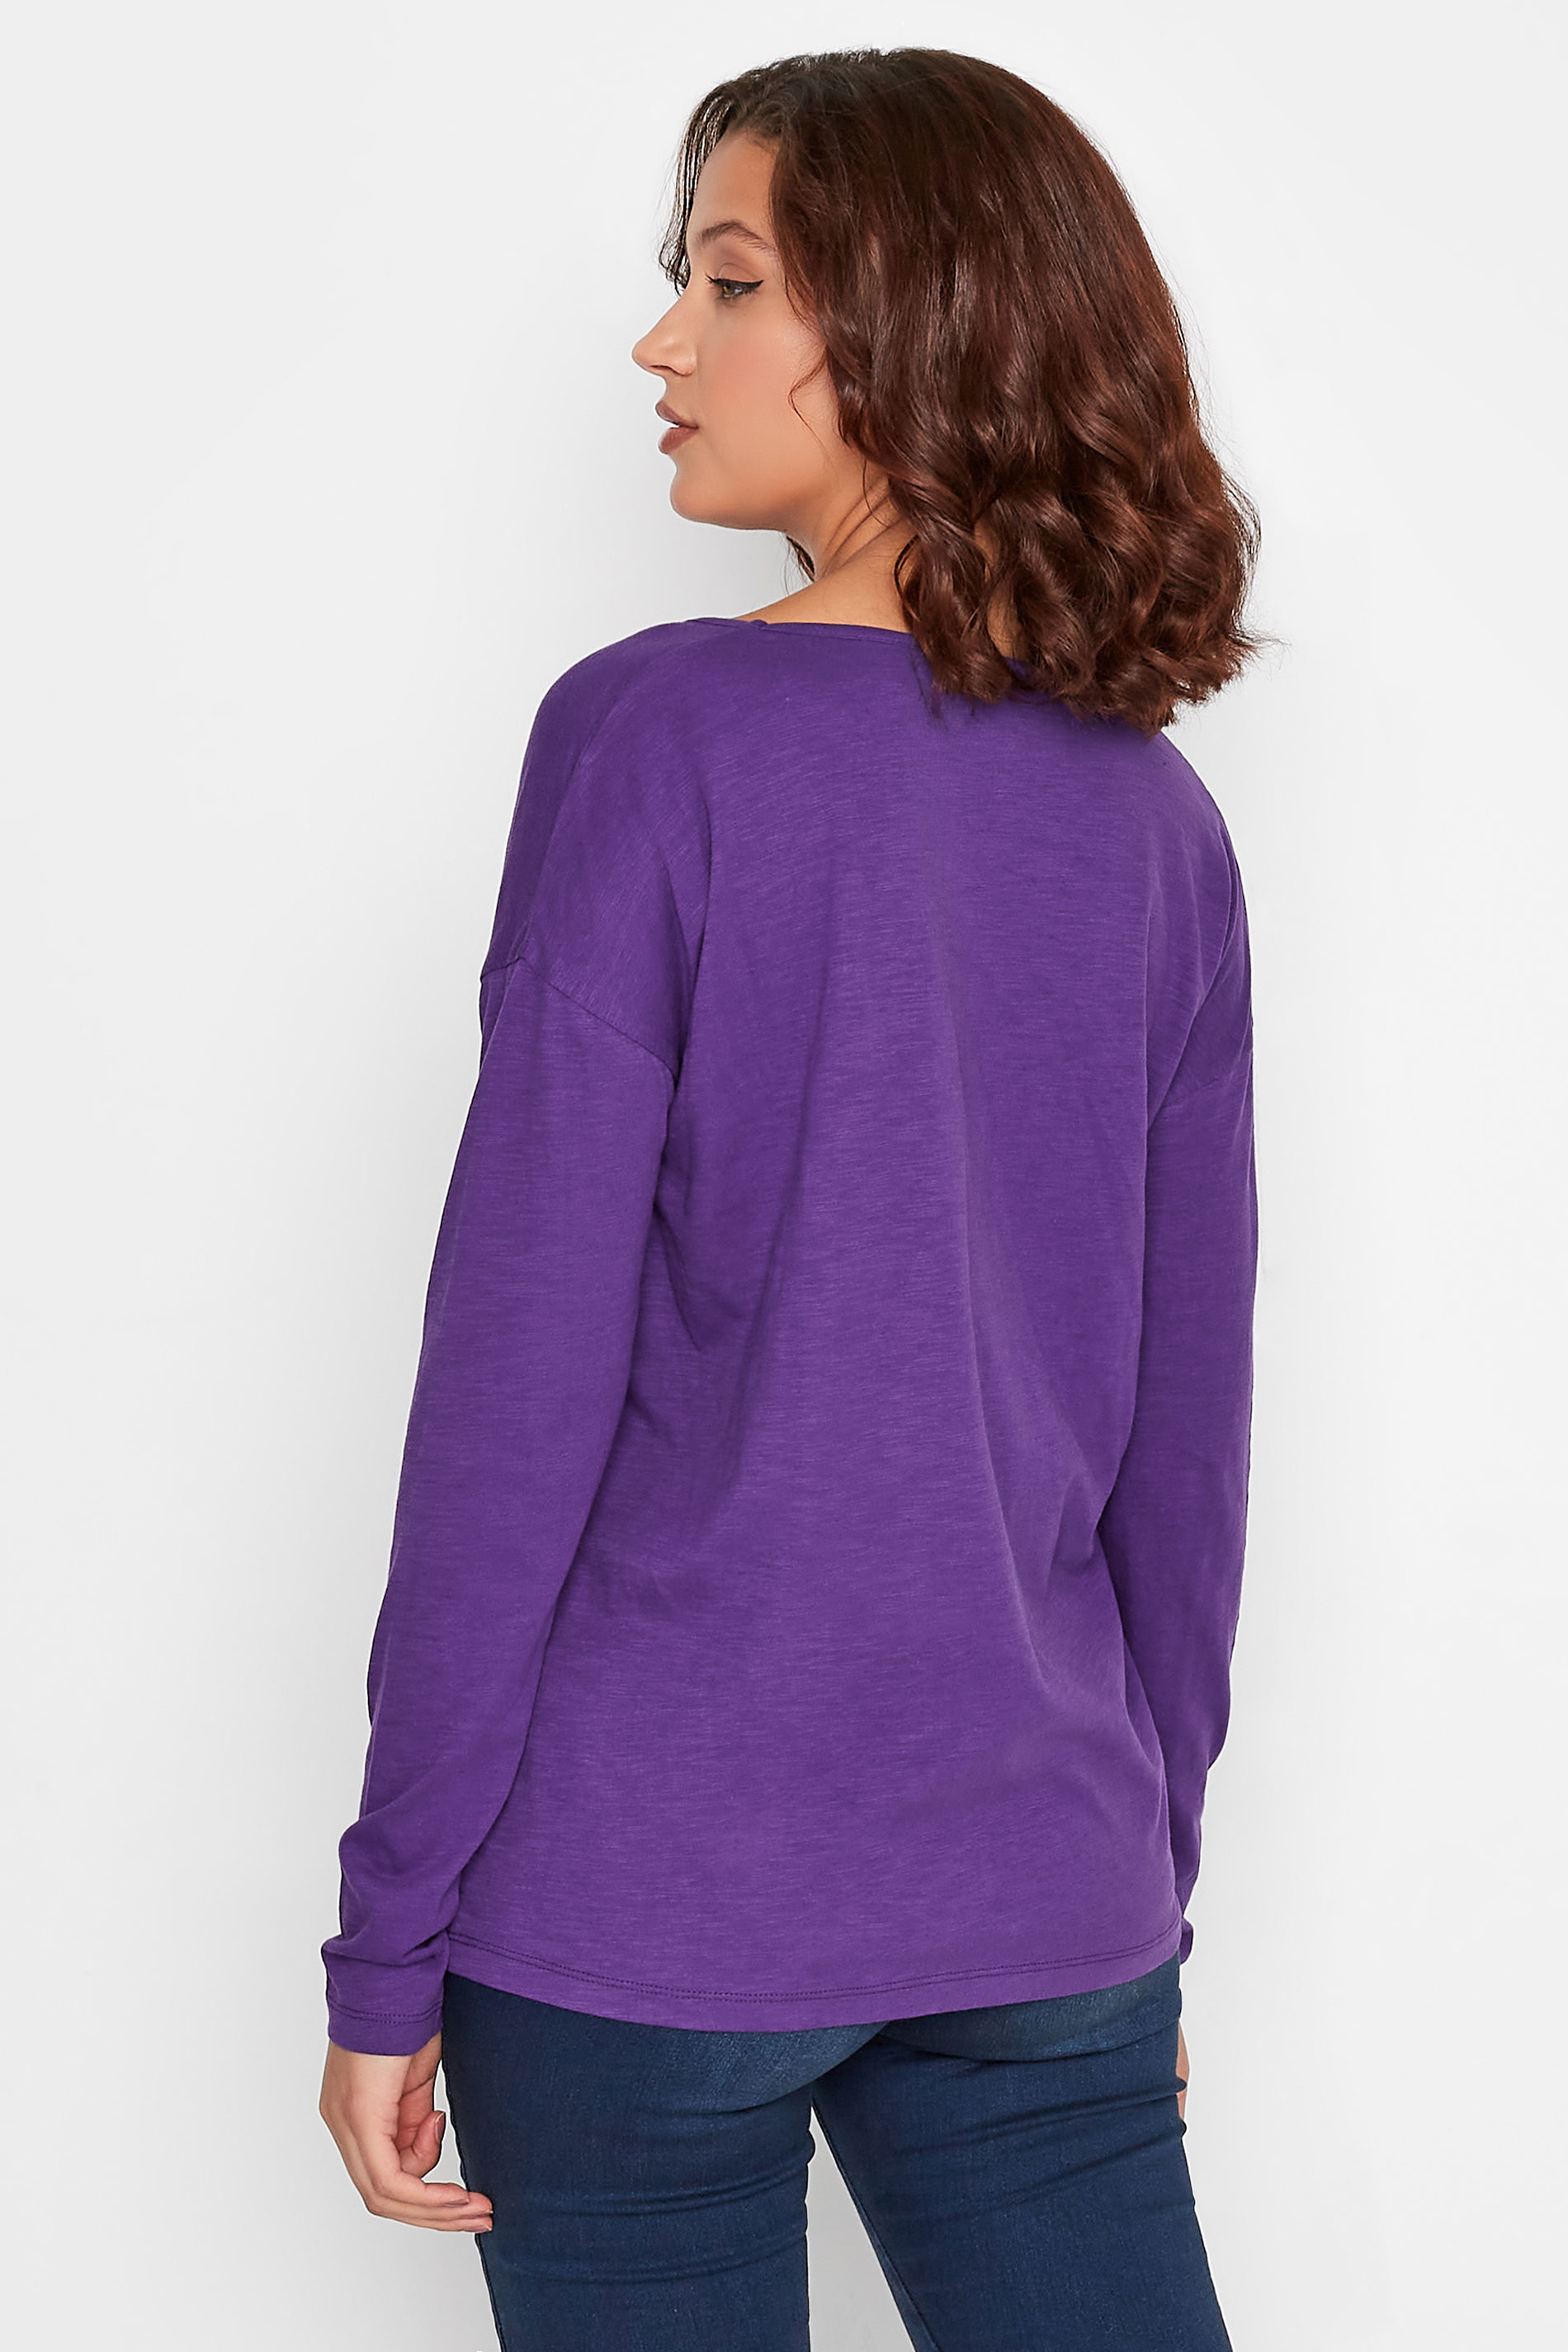 LTS Tall Women's Purple V-Neck Long Sleeve Cotton T-Shirt | Long Tall Sally 3